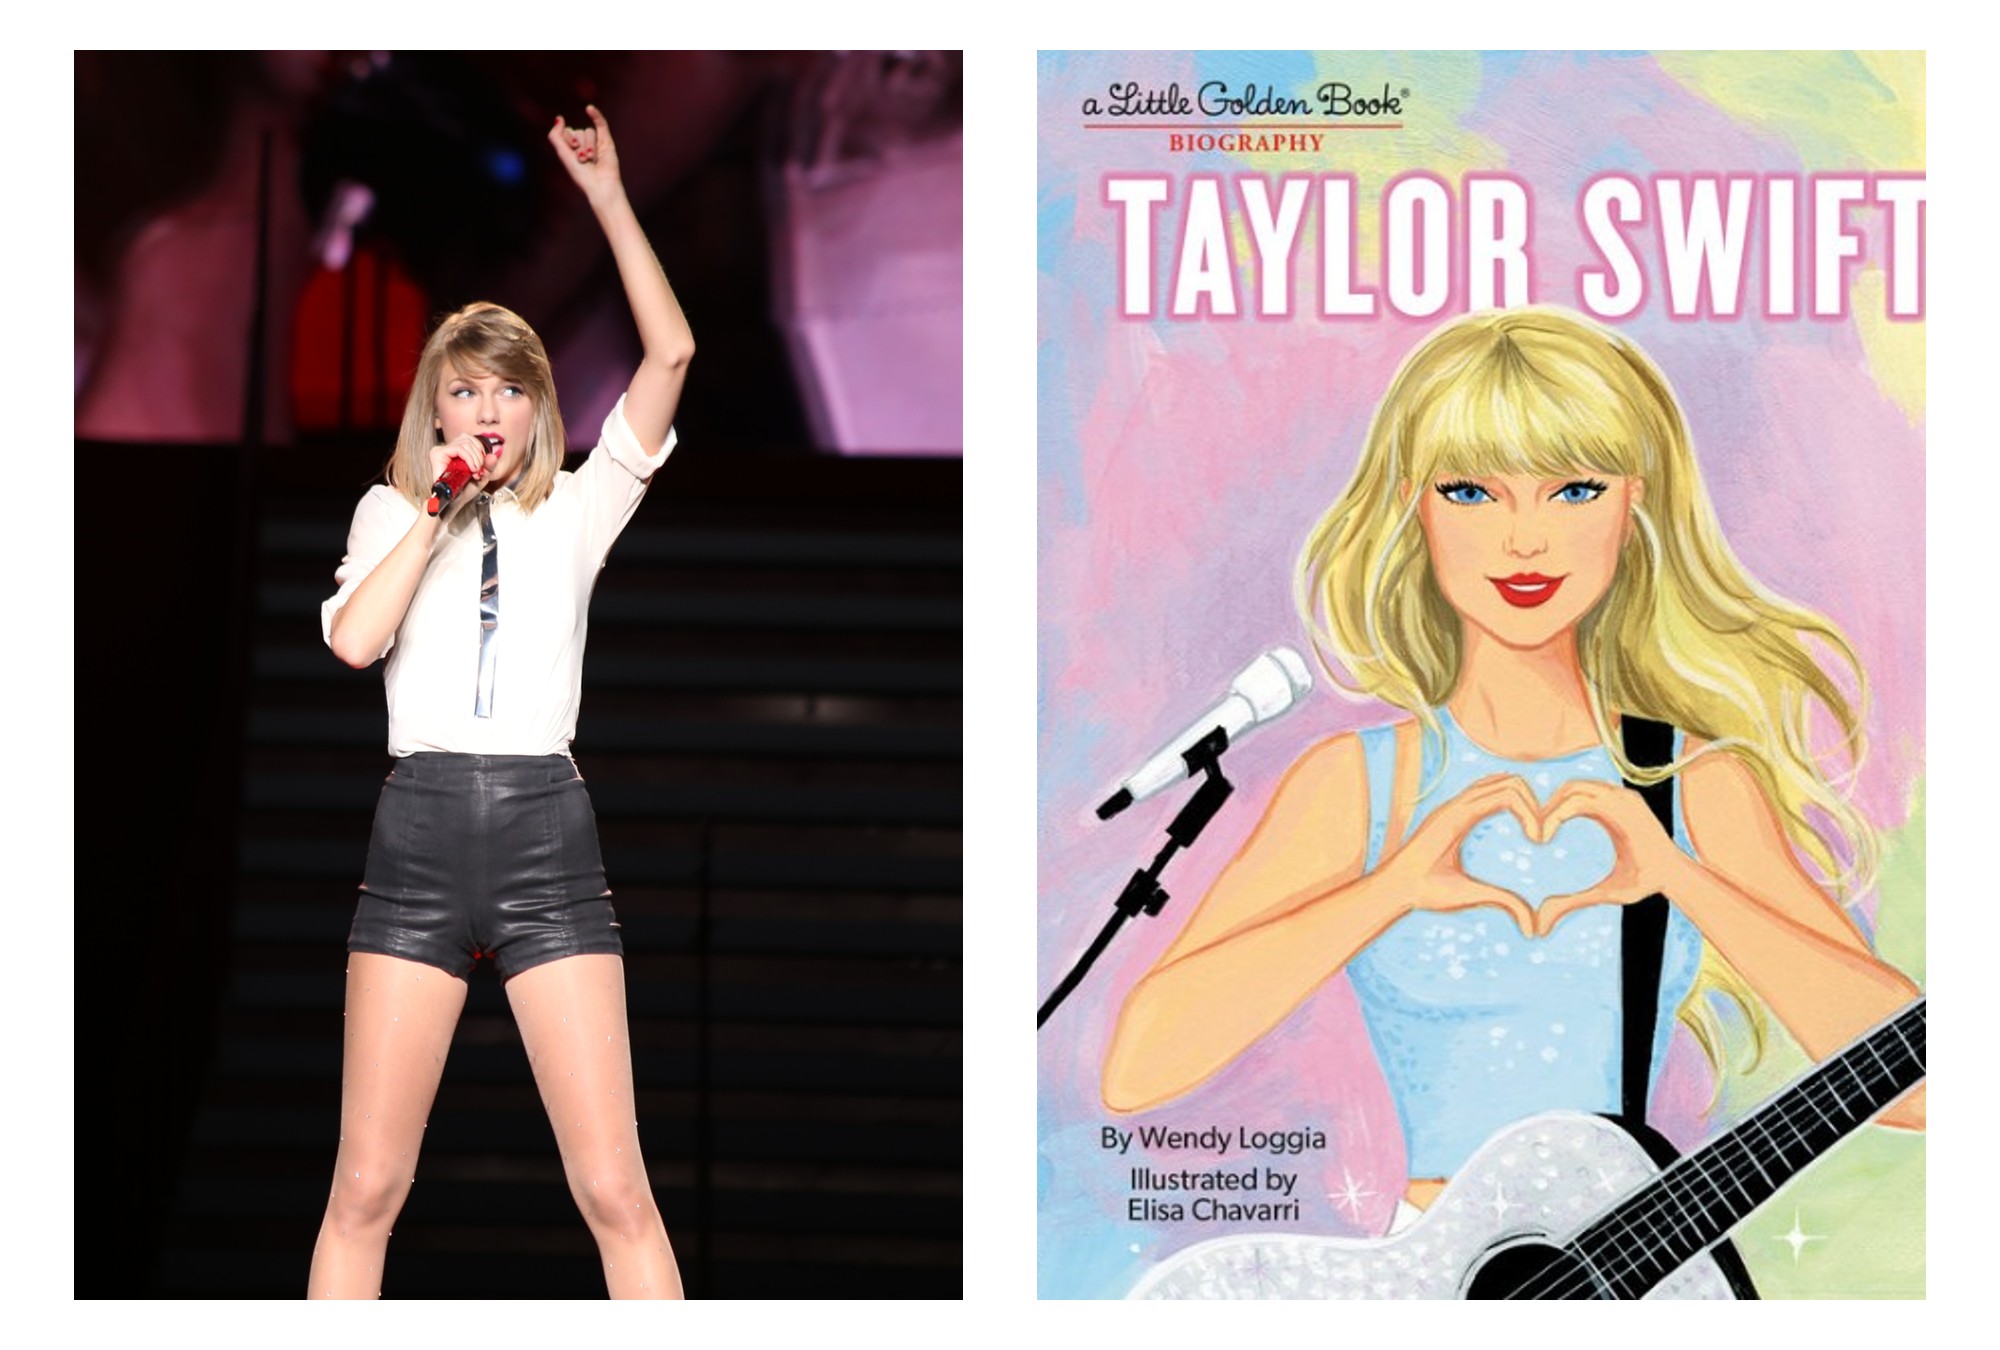 “Taylor Swift: A Little Golden Book Biography” es un fenómeno editorial.